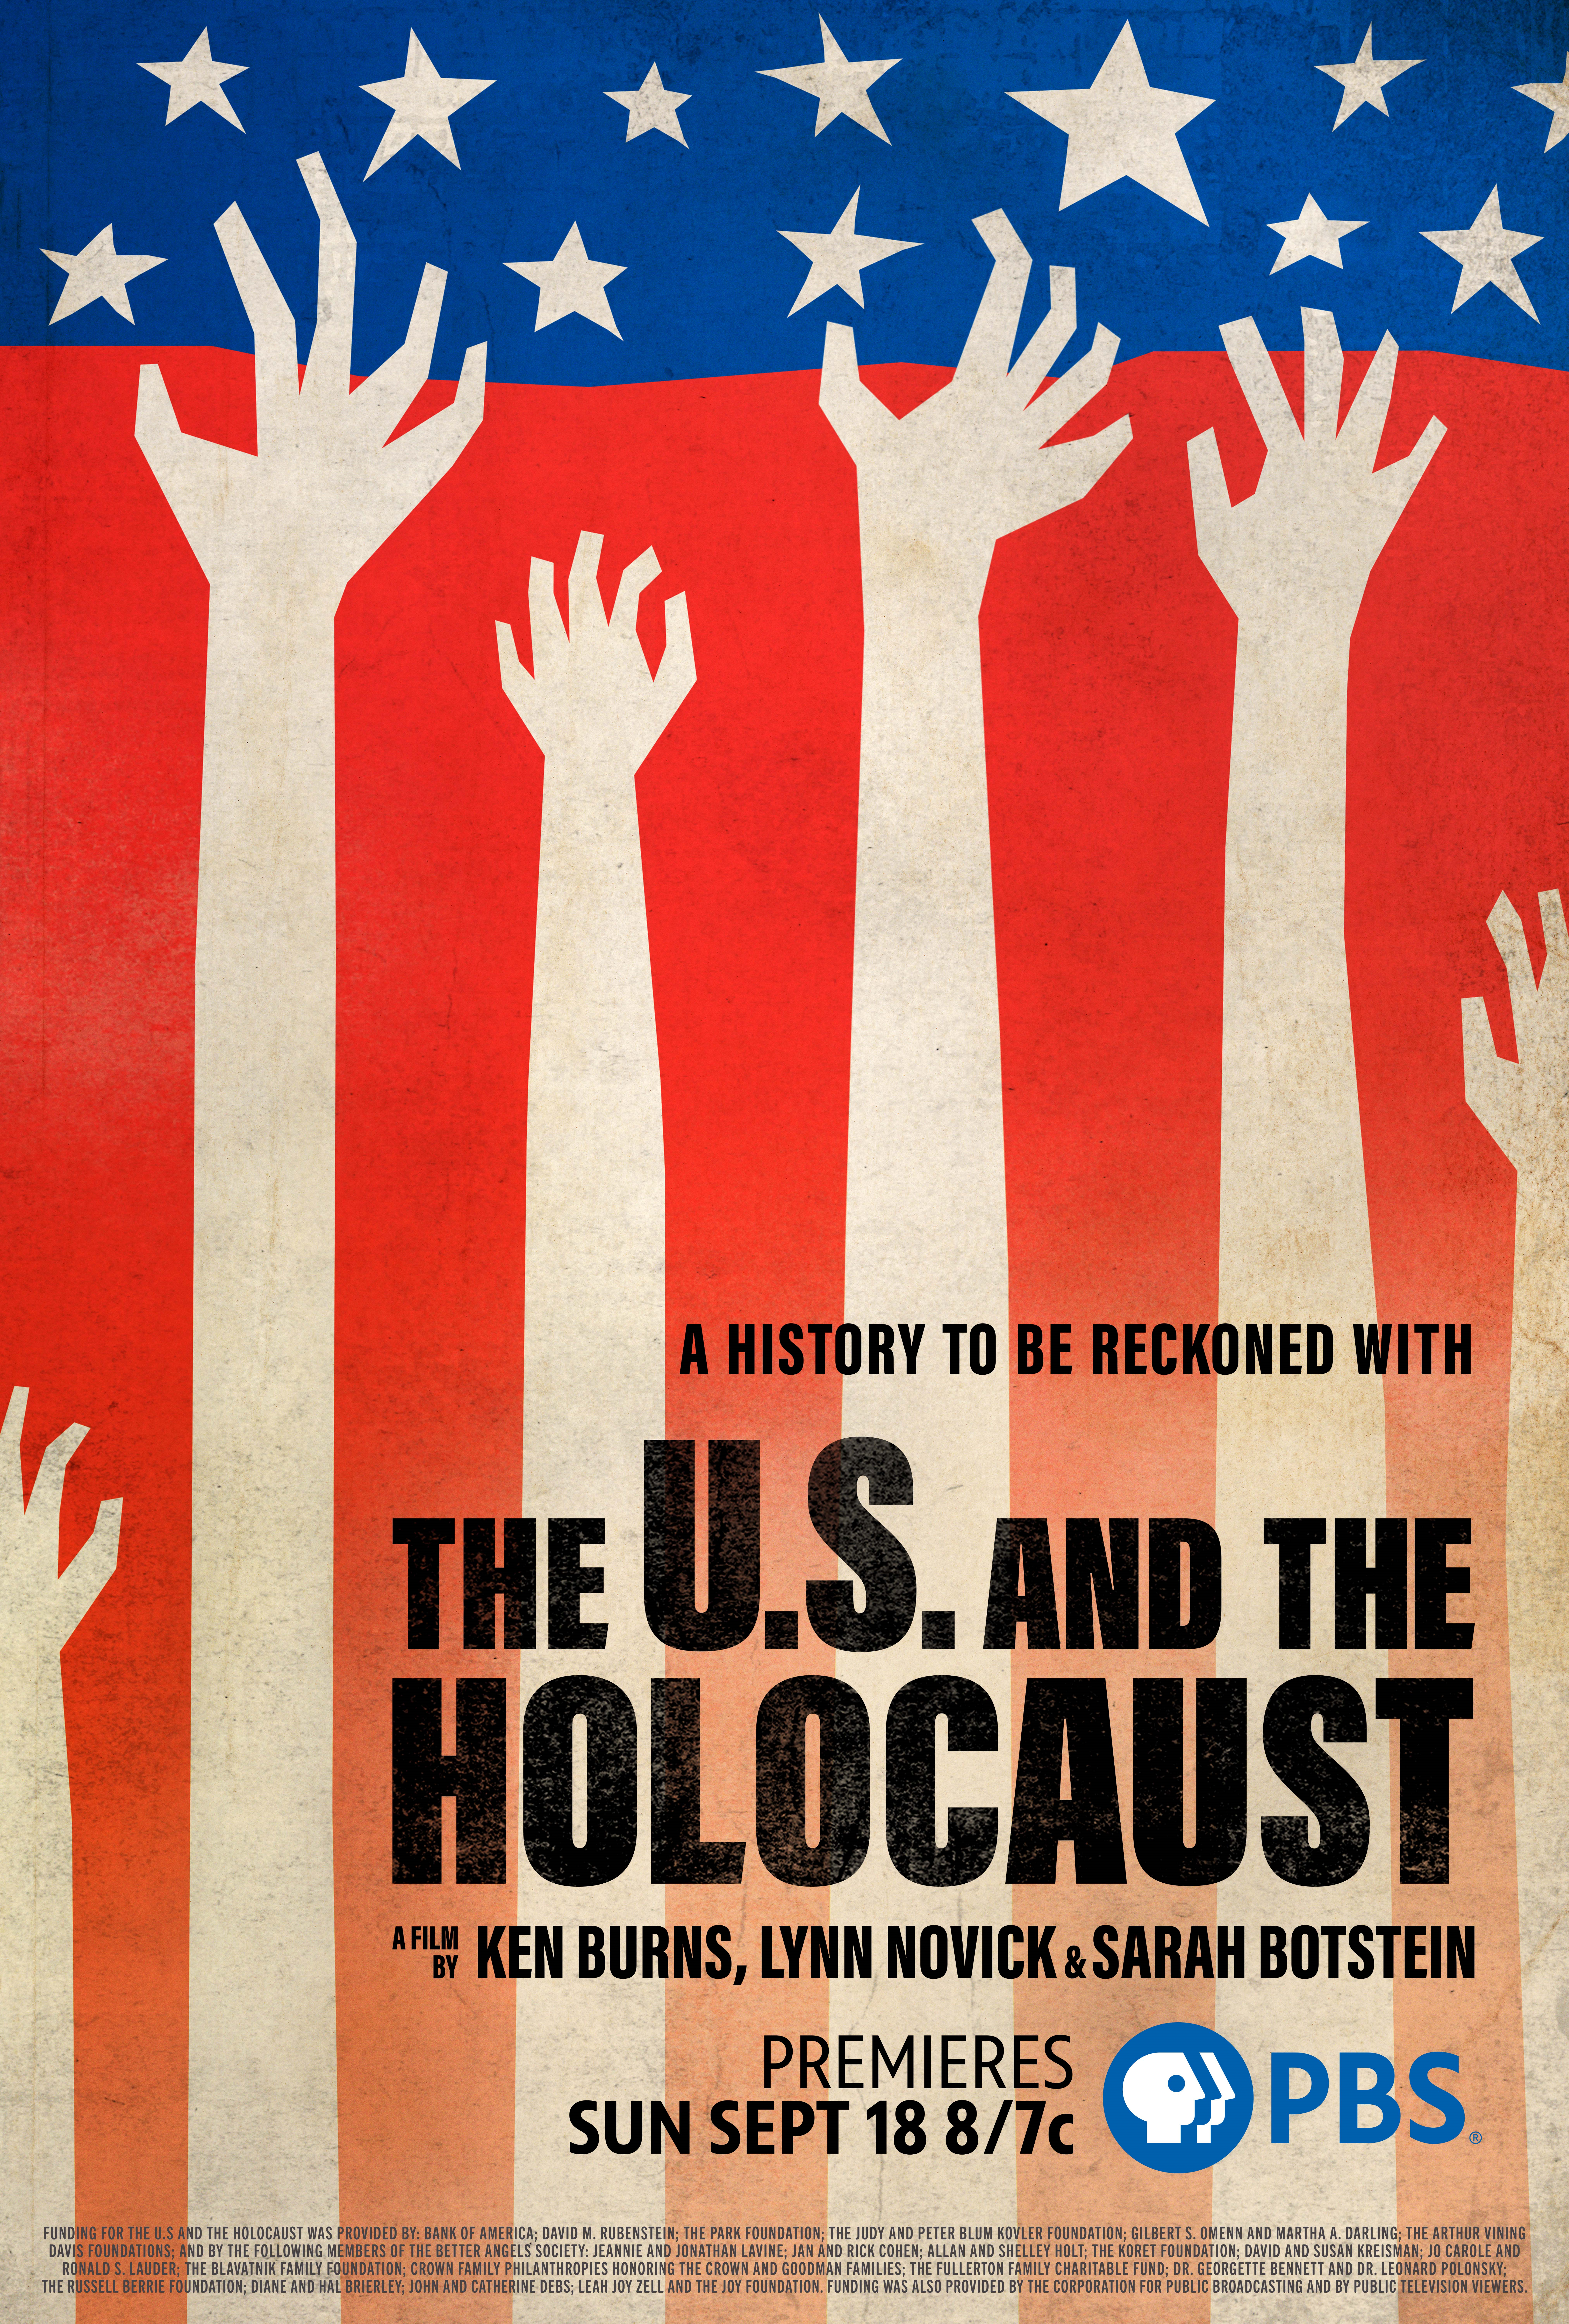 U.S. and the HOLOCAUST